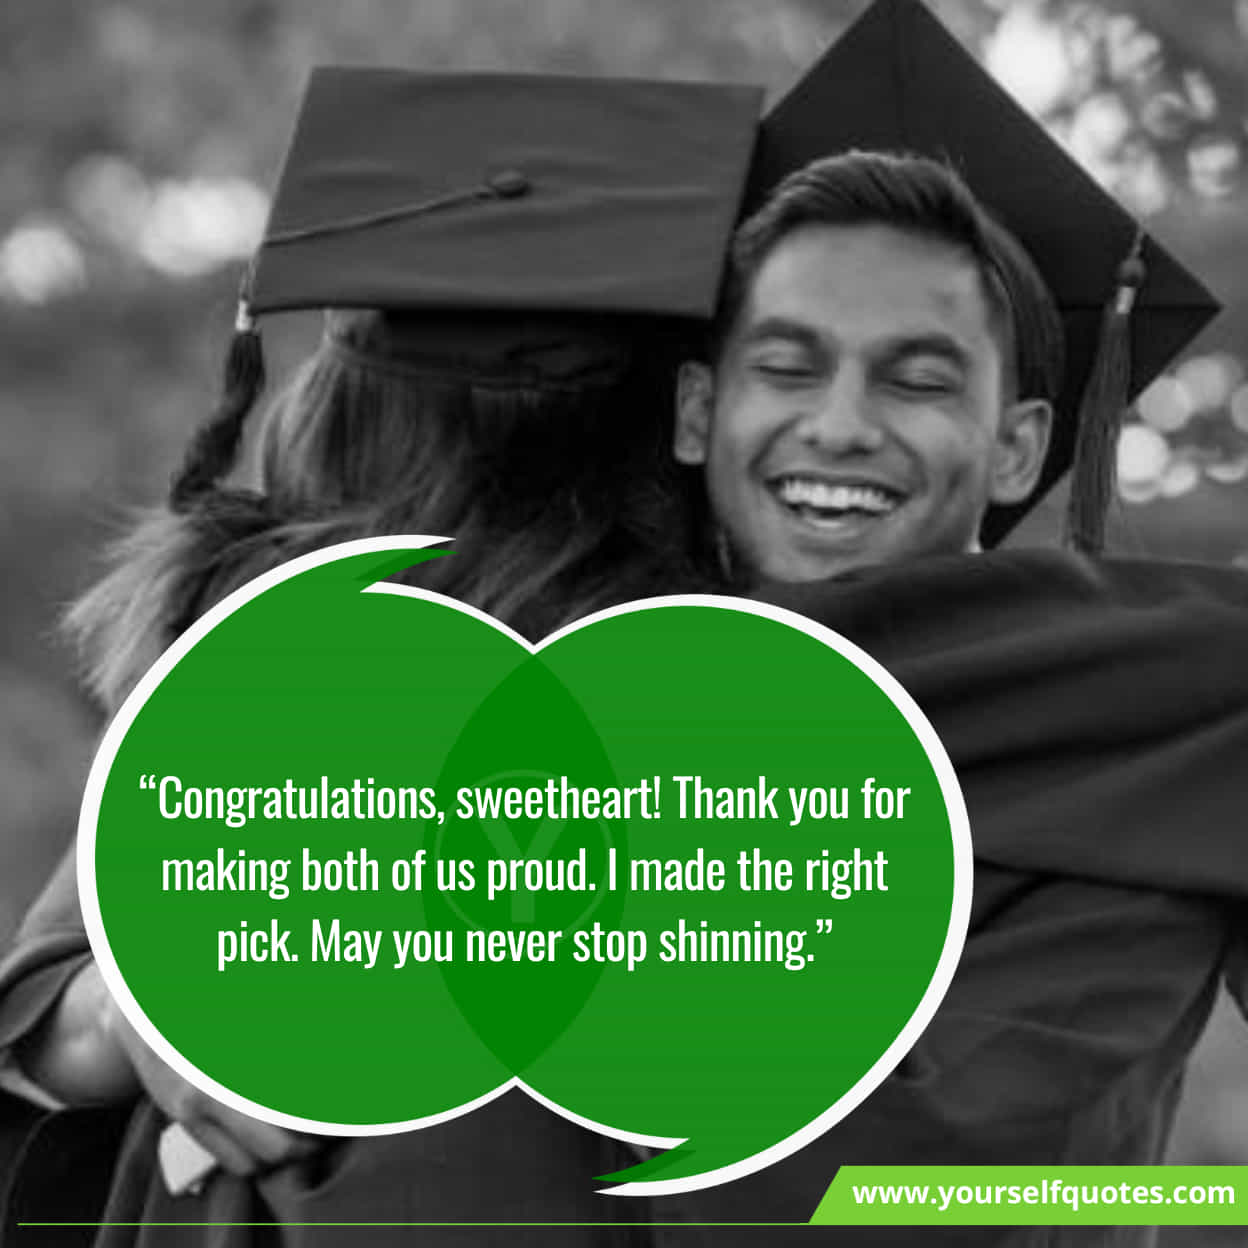 Heart-Warming Sweet Graduation Wishes To Girlfriend